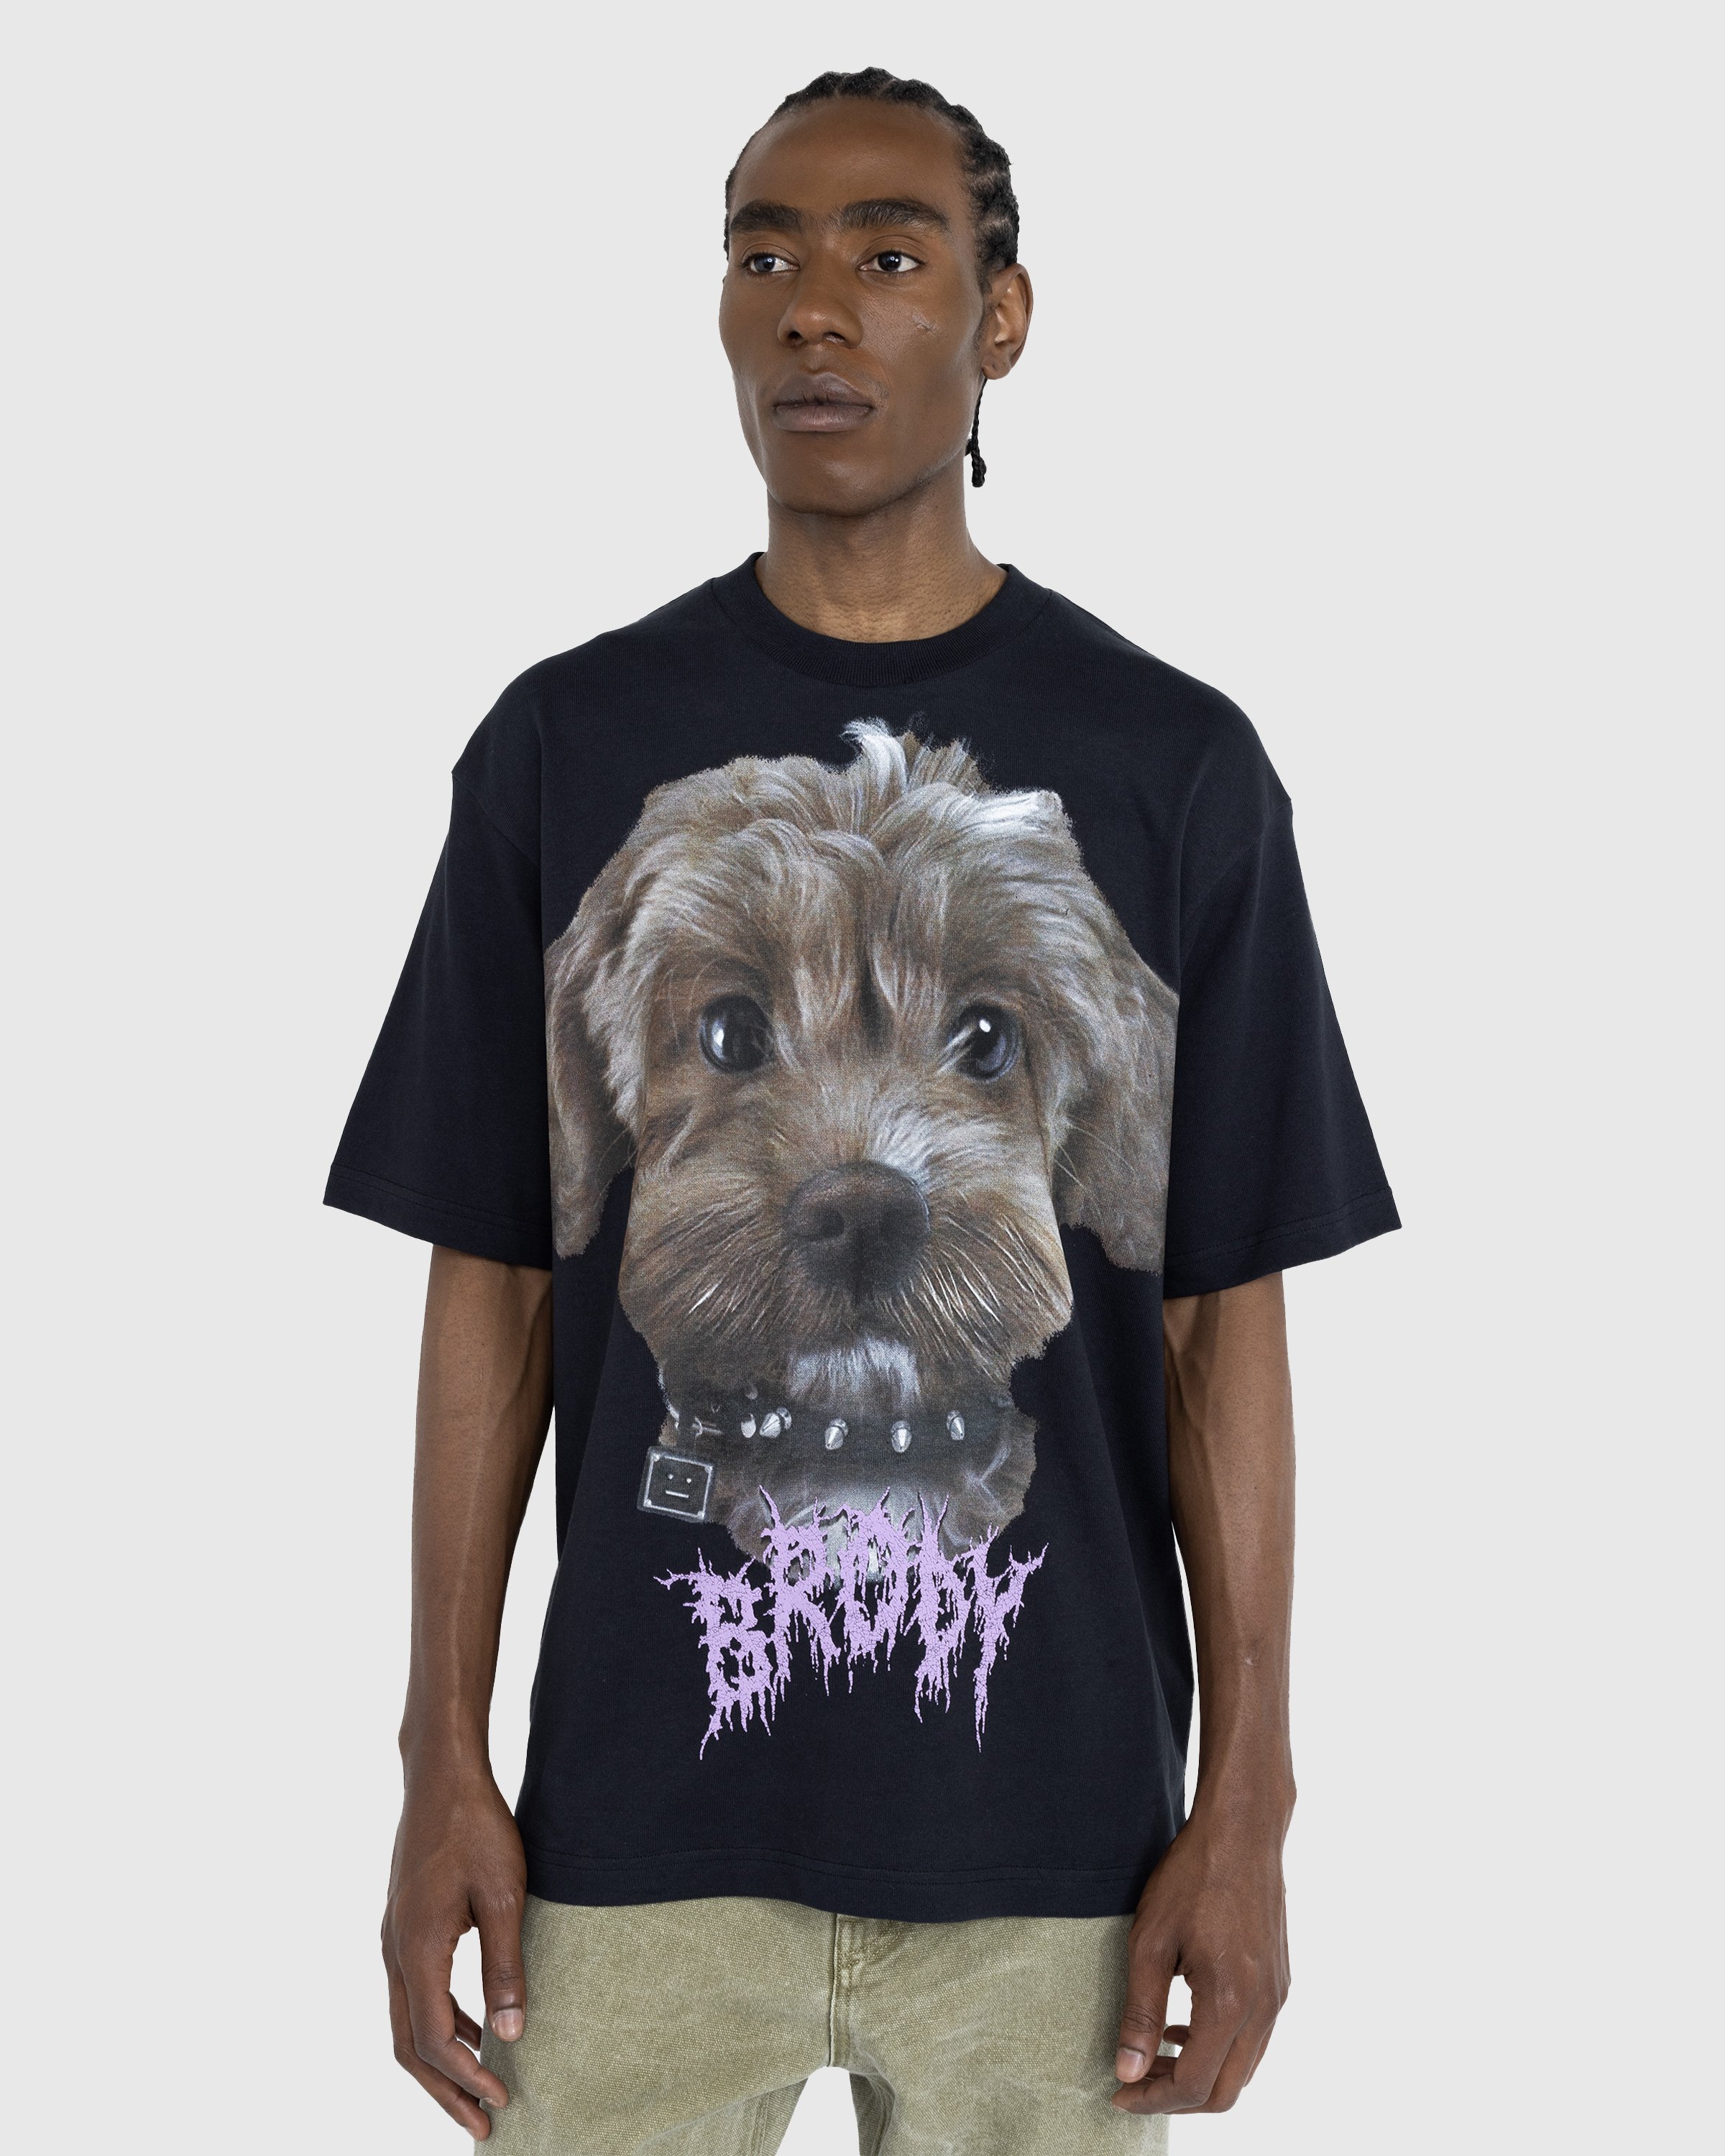 Acne Studios - Printed Dog T-Shirt Faded Black - Clothing - Black - Image 2